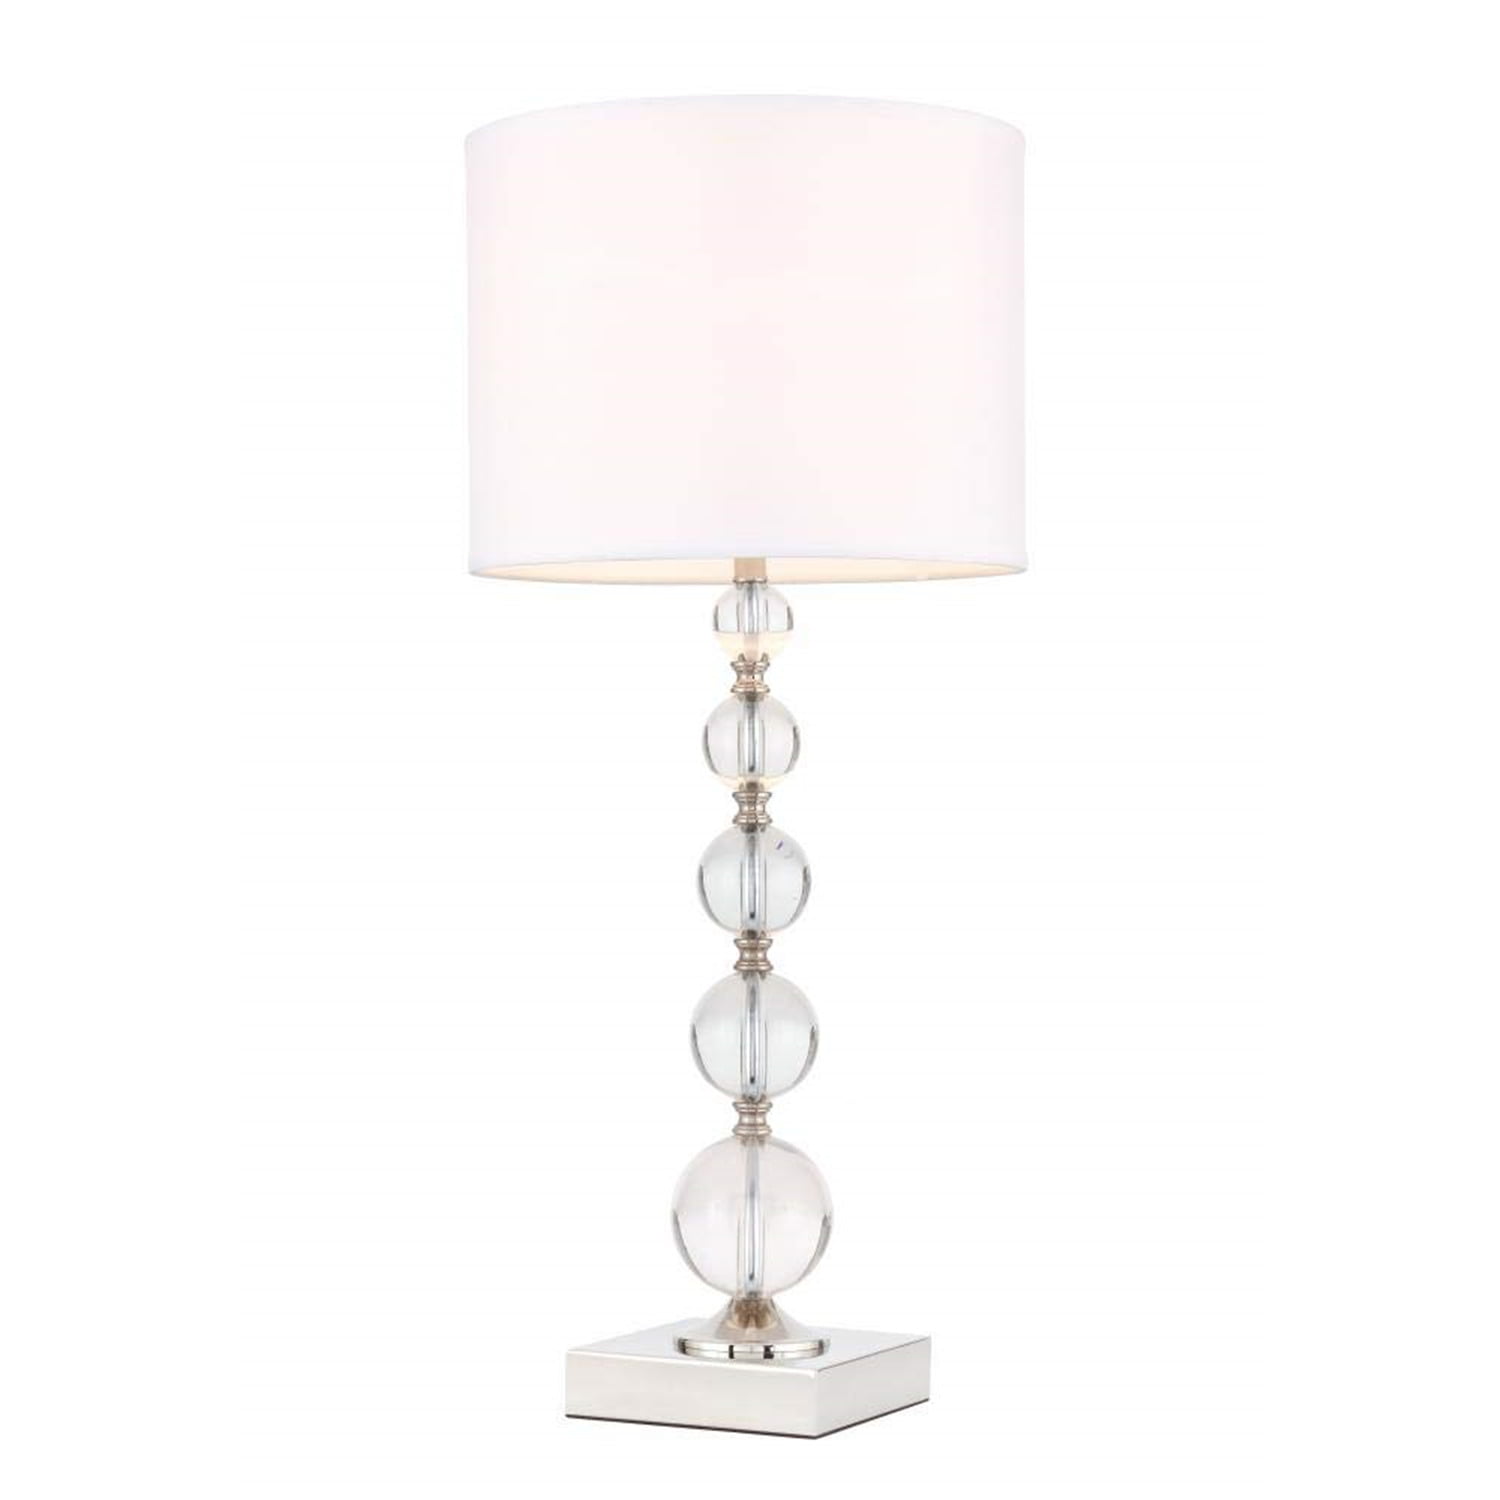 Elegant Decor Erte 1 light Polished Nickel Table Lamp - Walmart.com